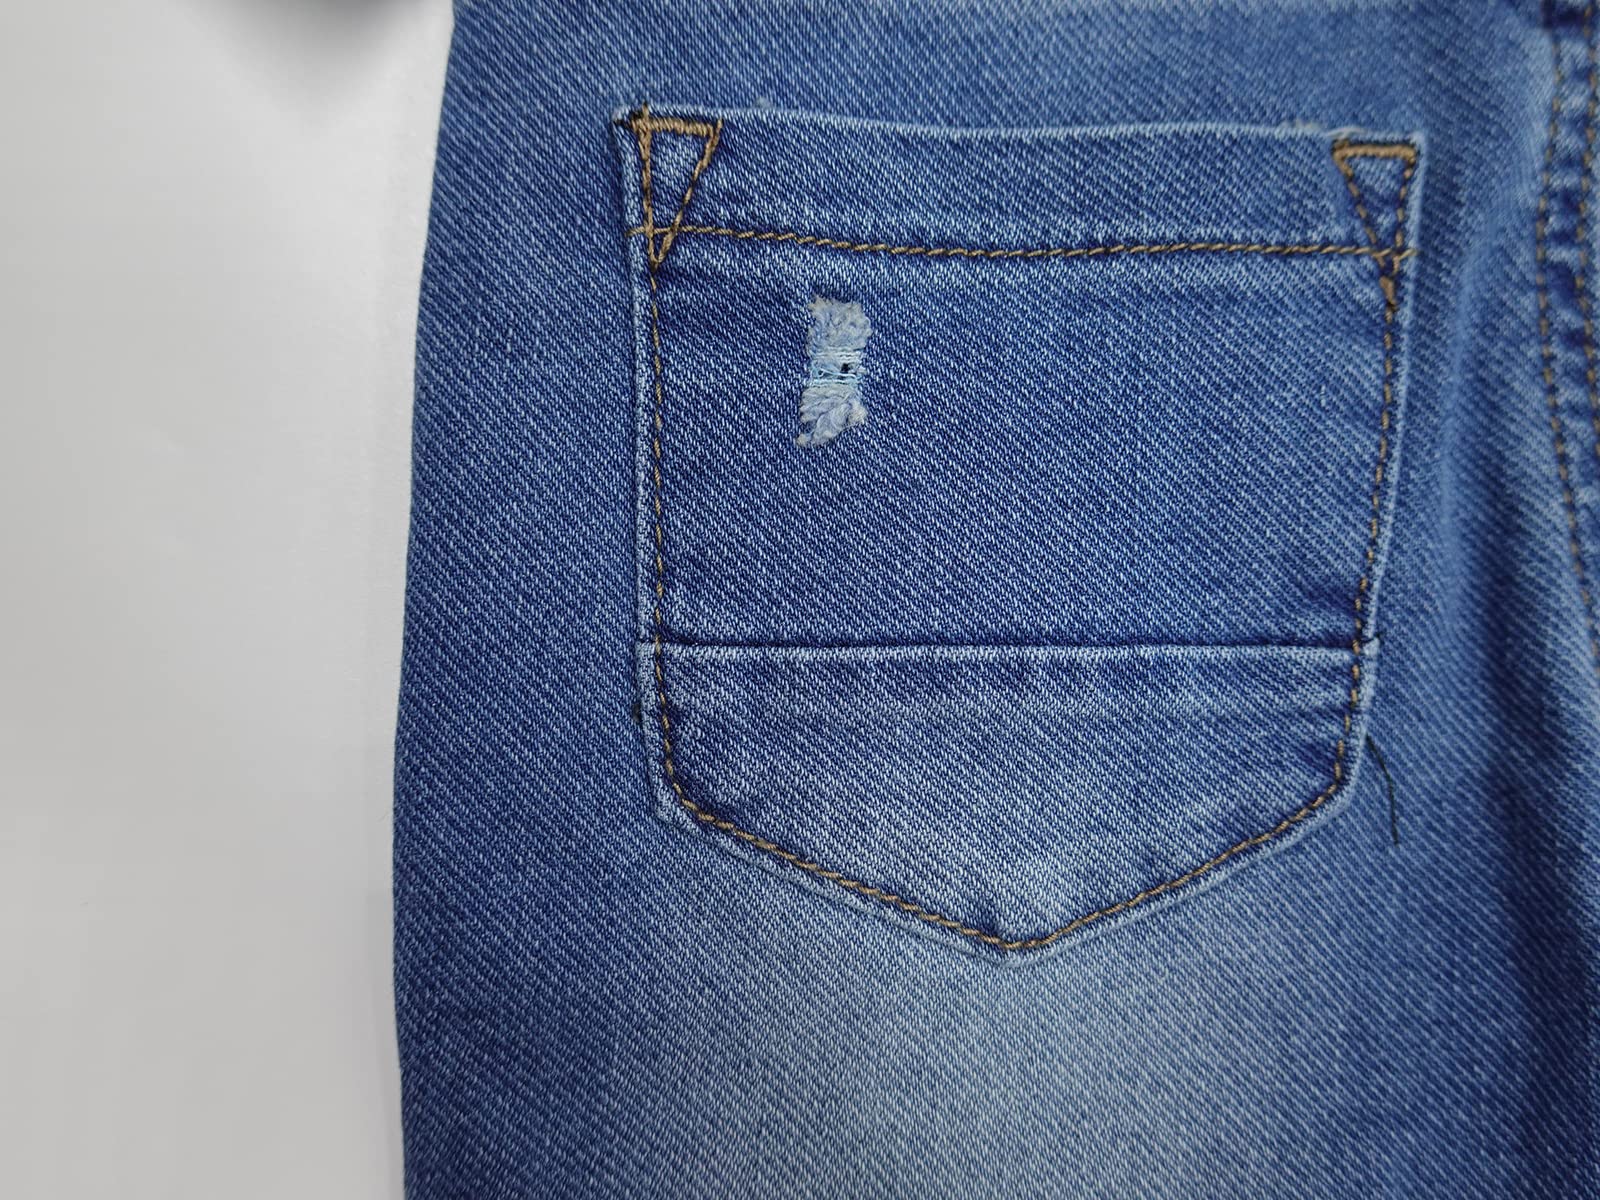 KIDSCOOL SPACE Baby Little Boys Slim Fit Jeans,Ripped Big Bib Pocket Fashion Denim Overalls